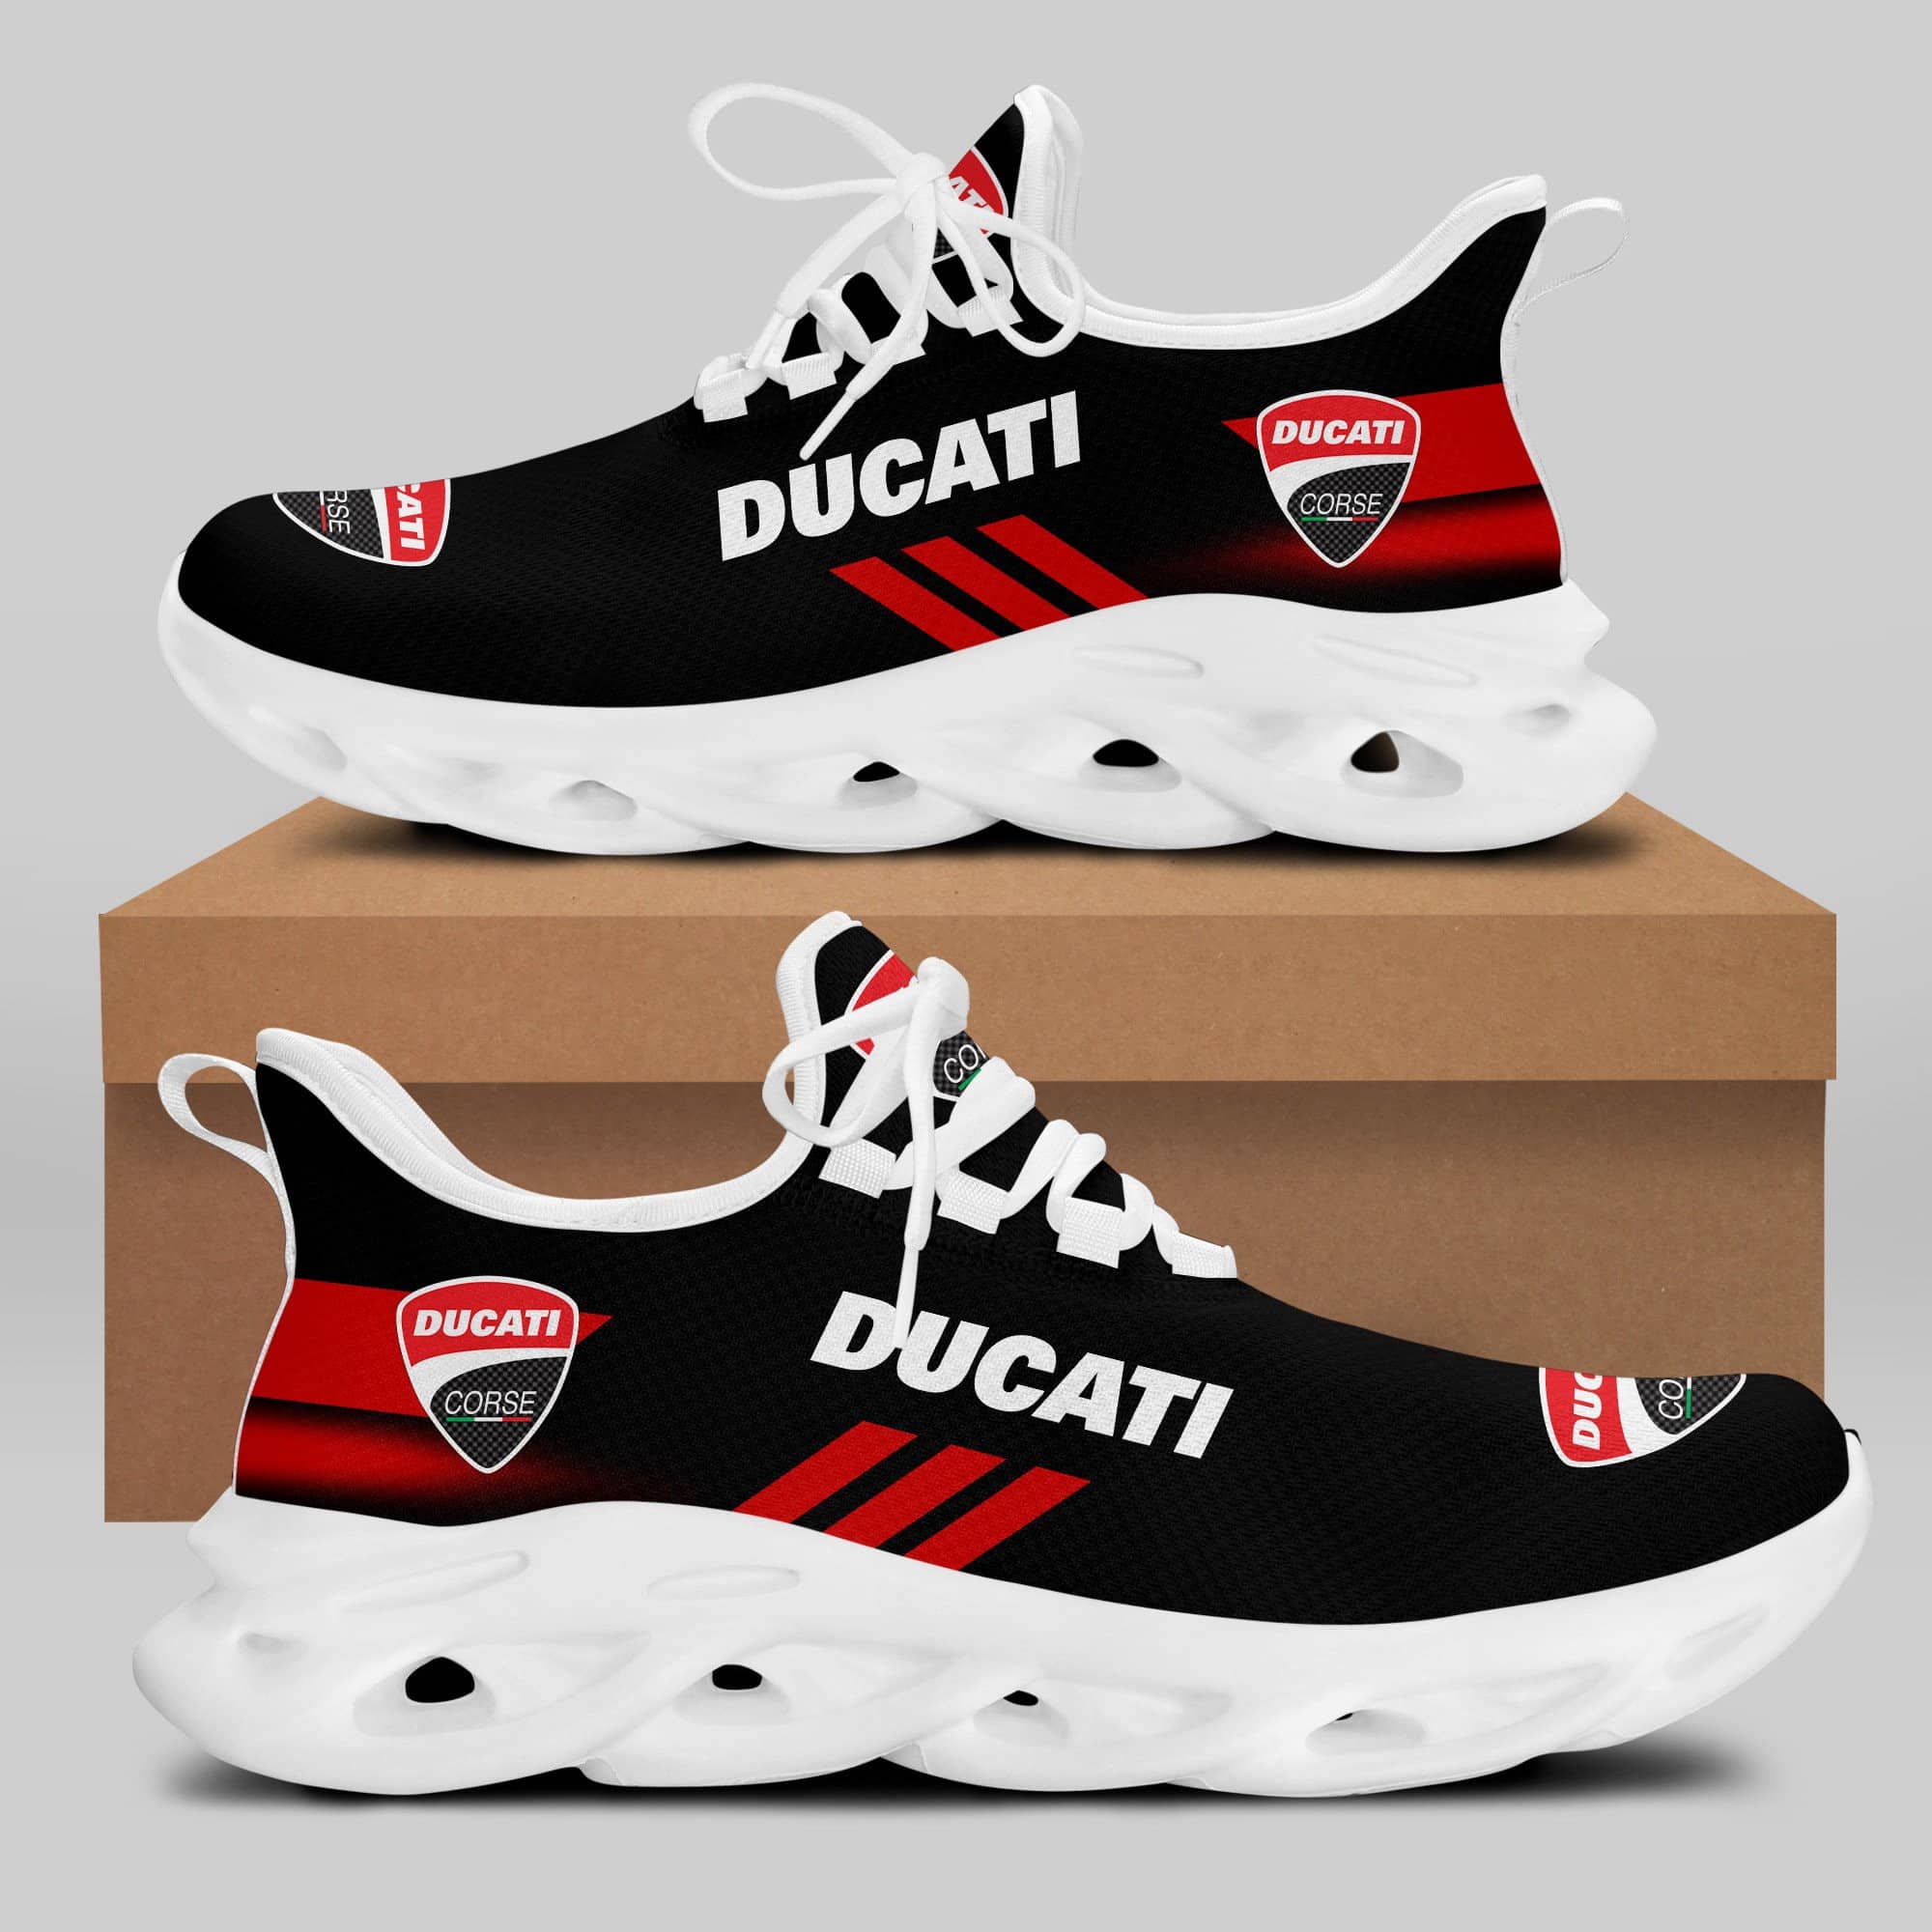 Ducati Racing Running Shoes Max Soul Shoes Sneakers Ver 34 2